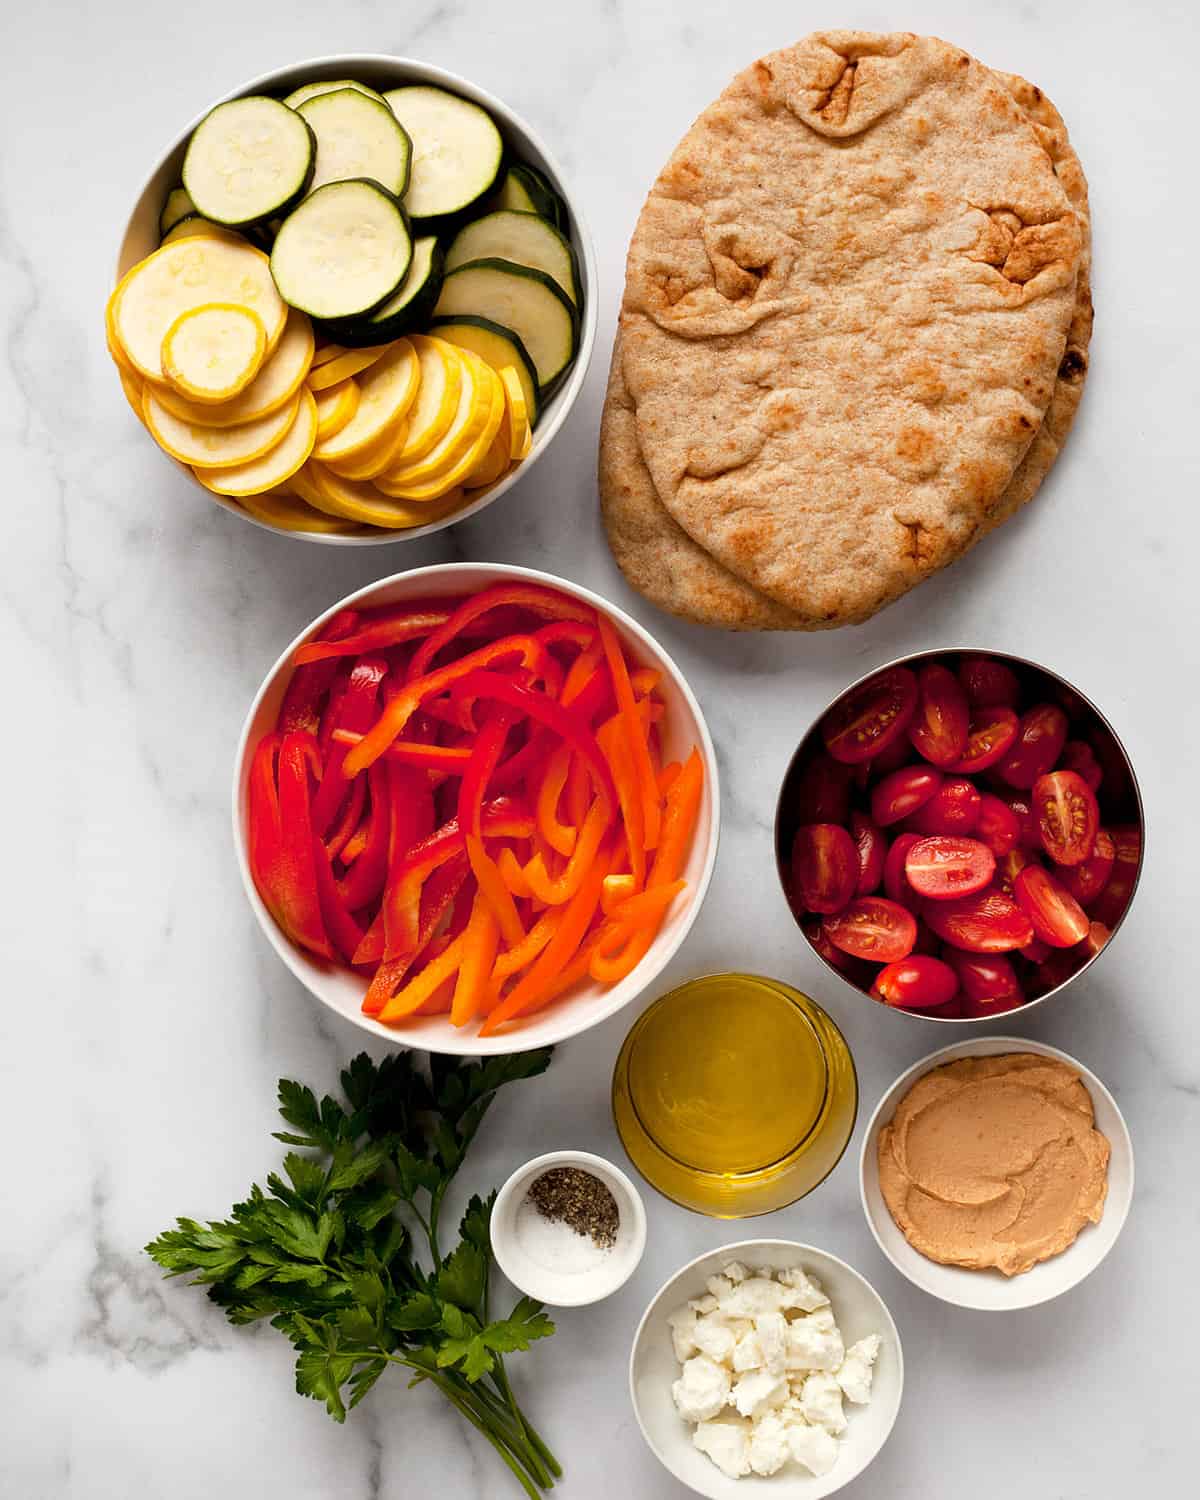 Ingredients including naan, vegetables, hummus and olive oil.